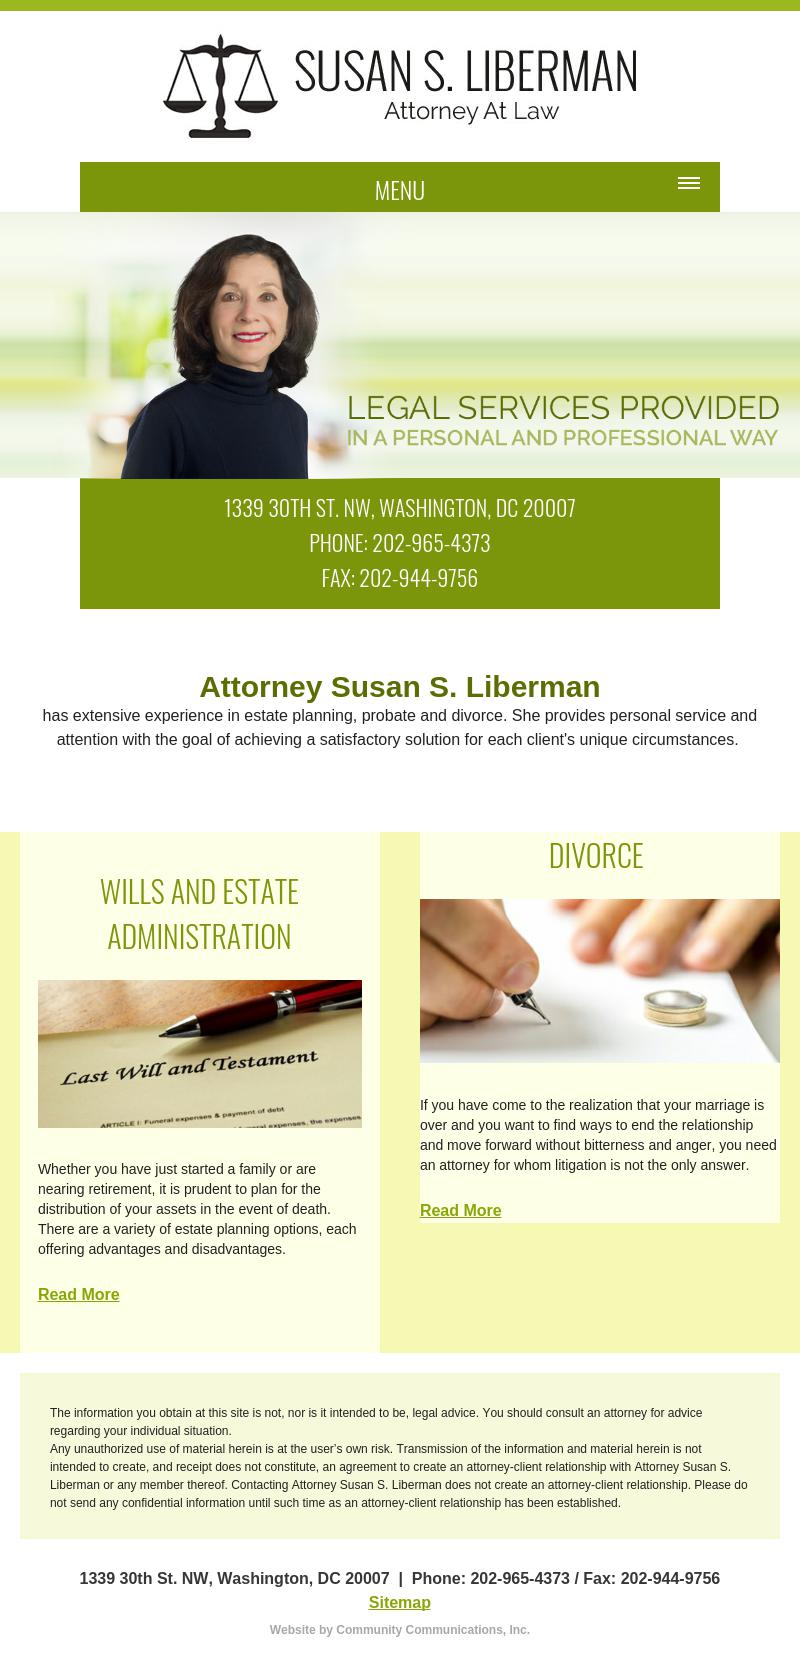 Susan S. Liberman, Attorney at Law - Washington DC Lawyers